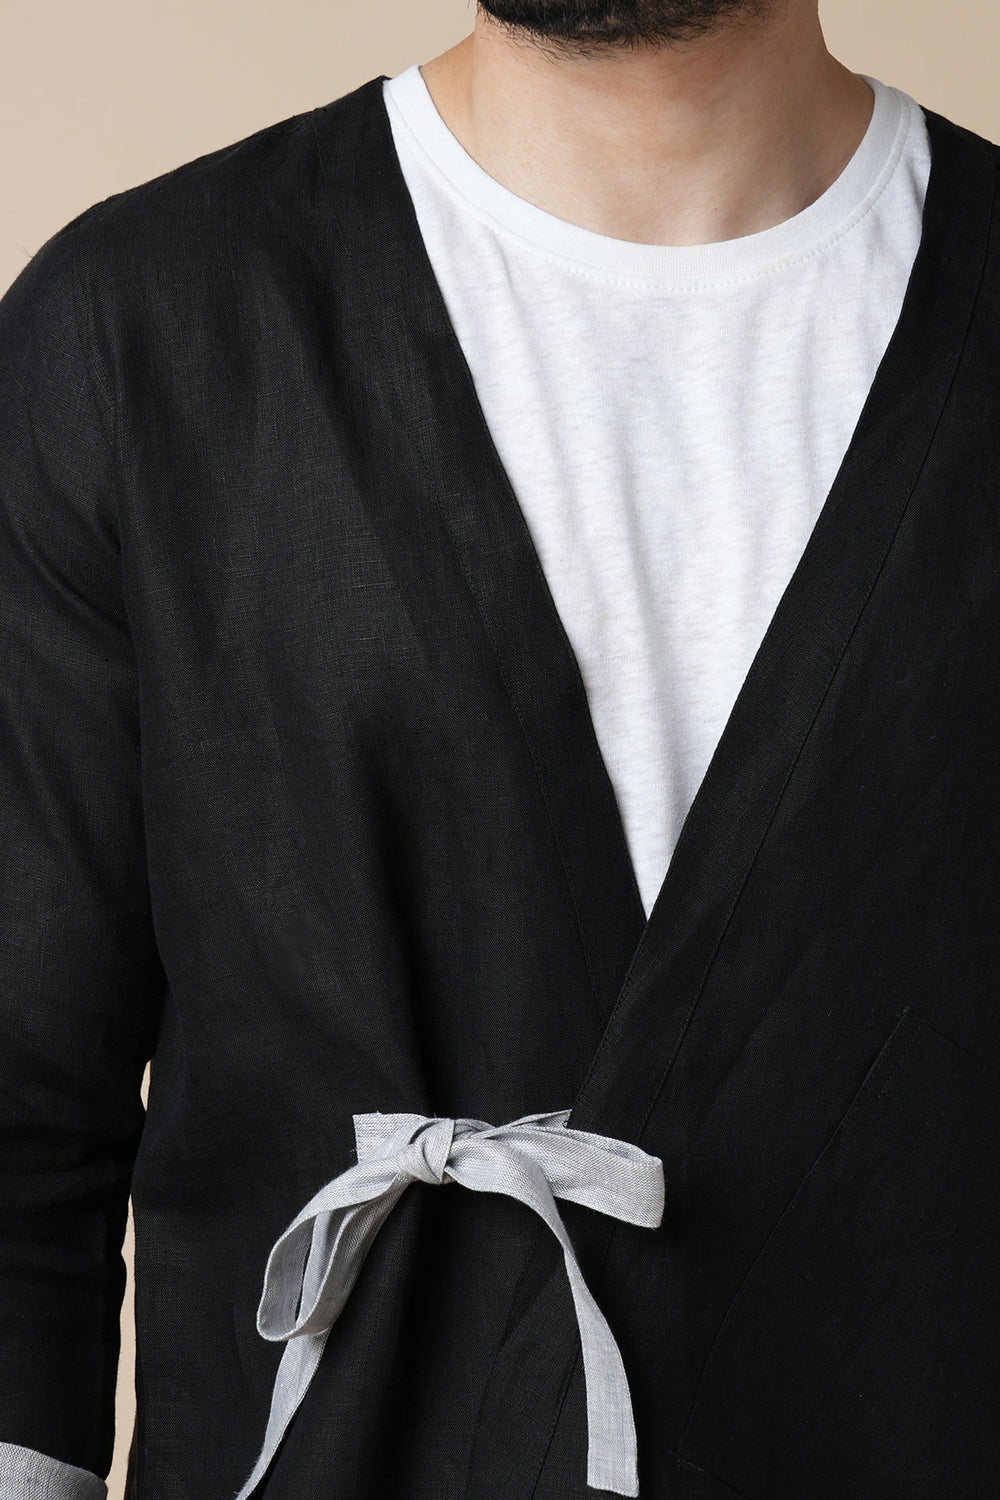 B. Label Jubiliant Kimono for Men